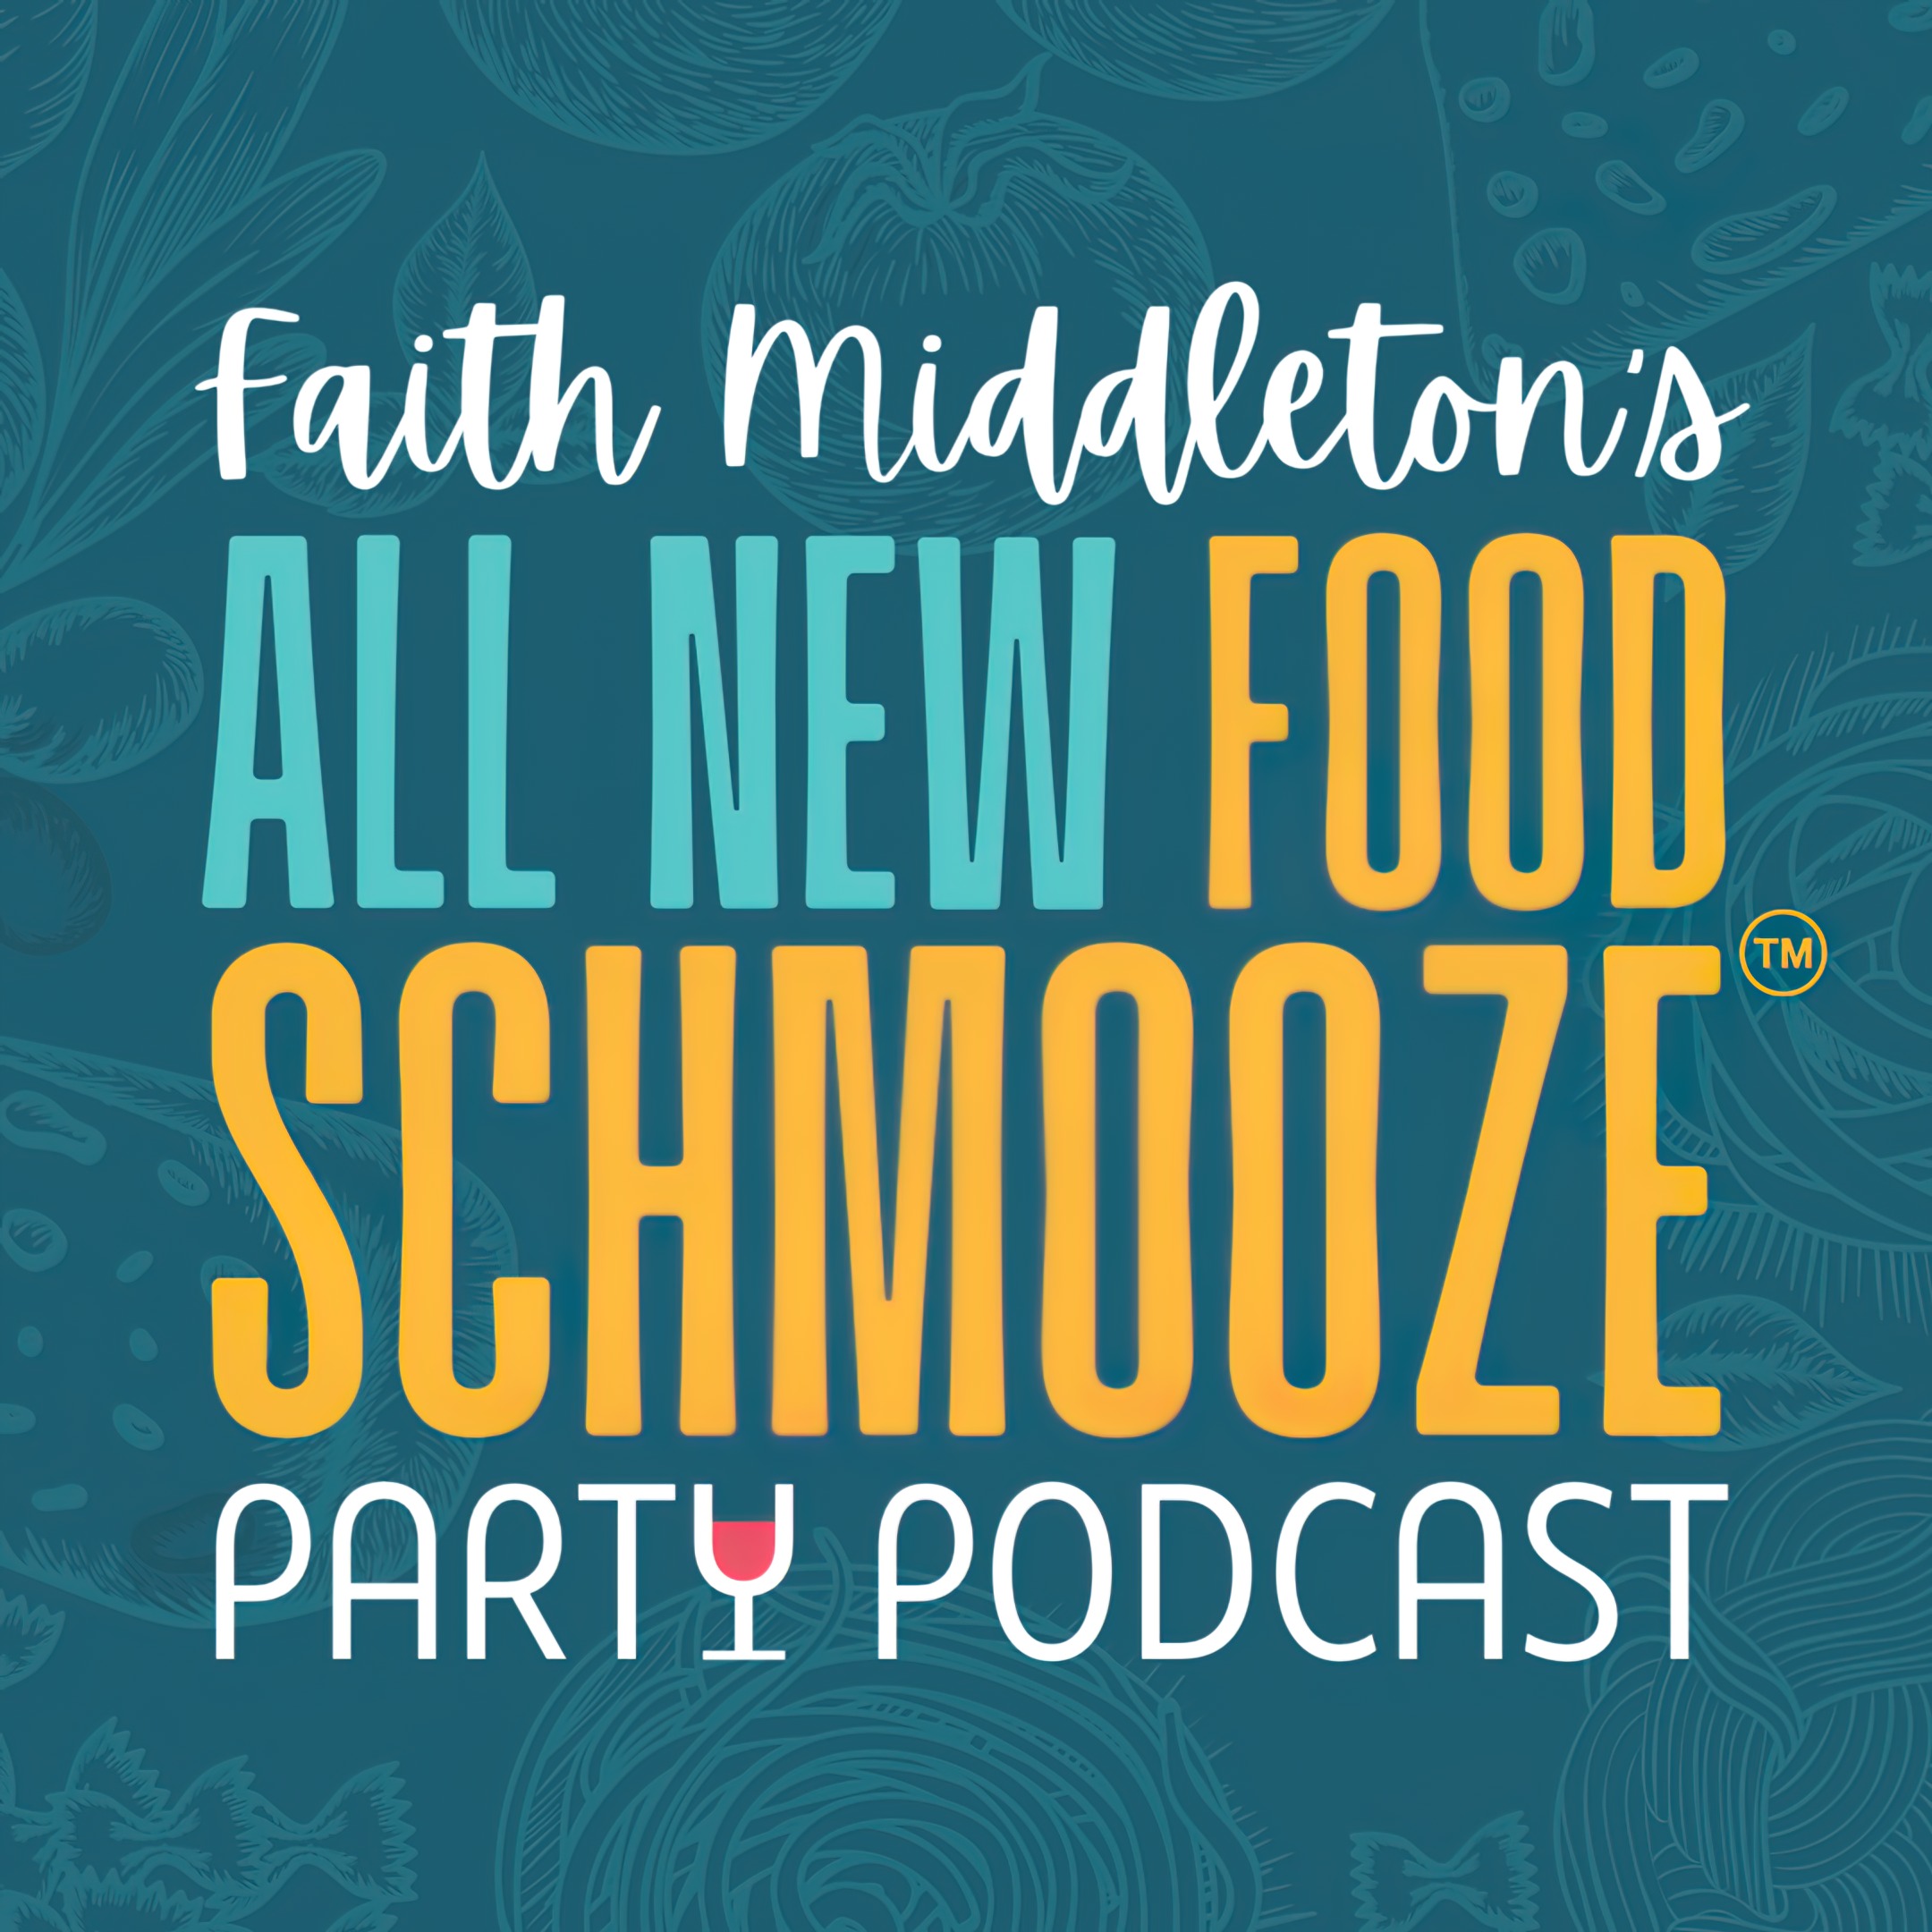 Faith Middleton's All-New Food Schmooze Party Podcast